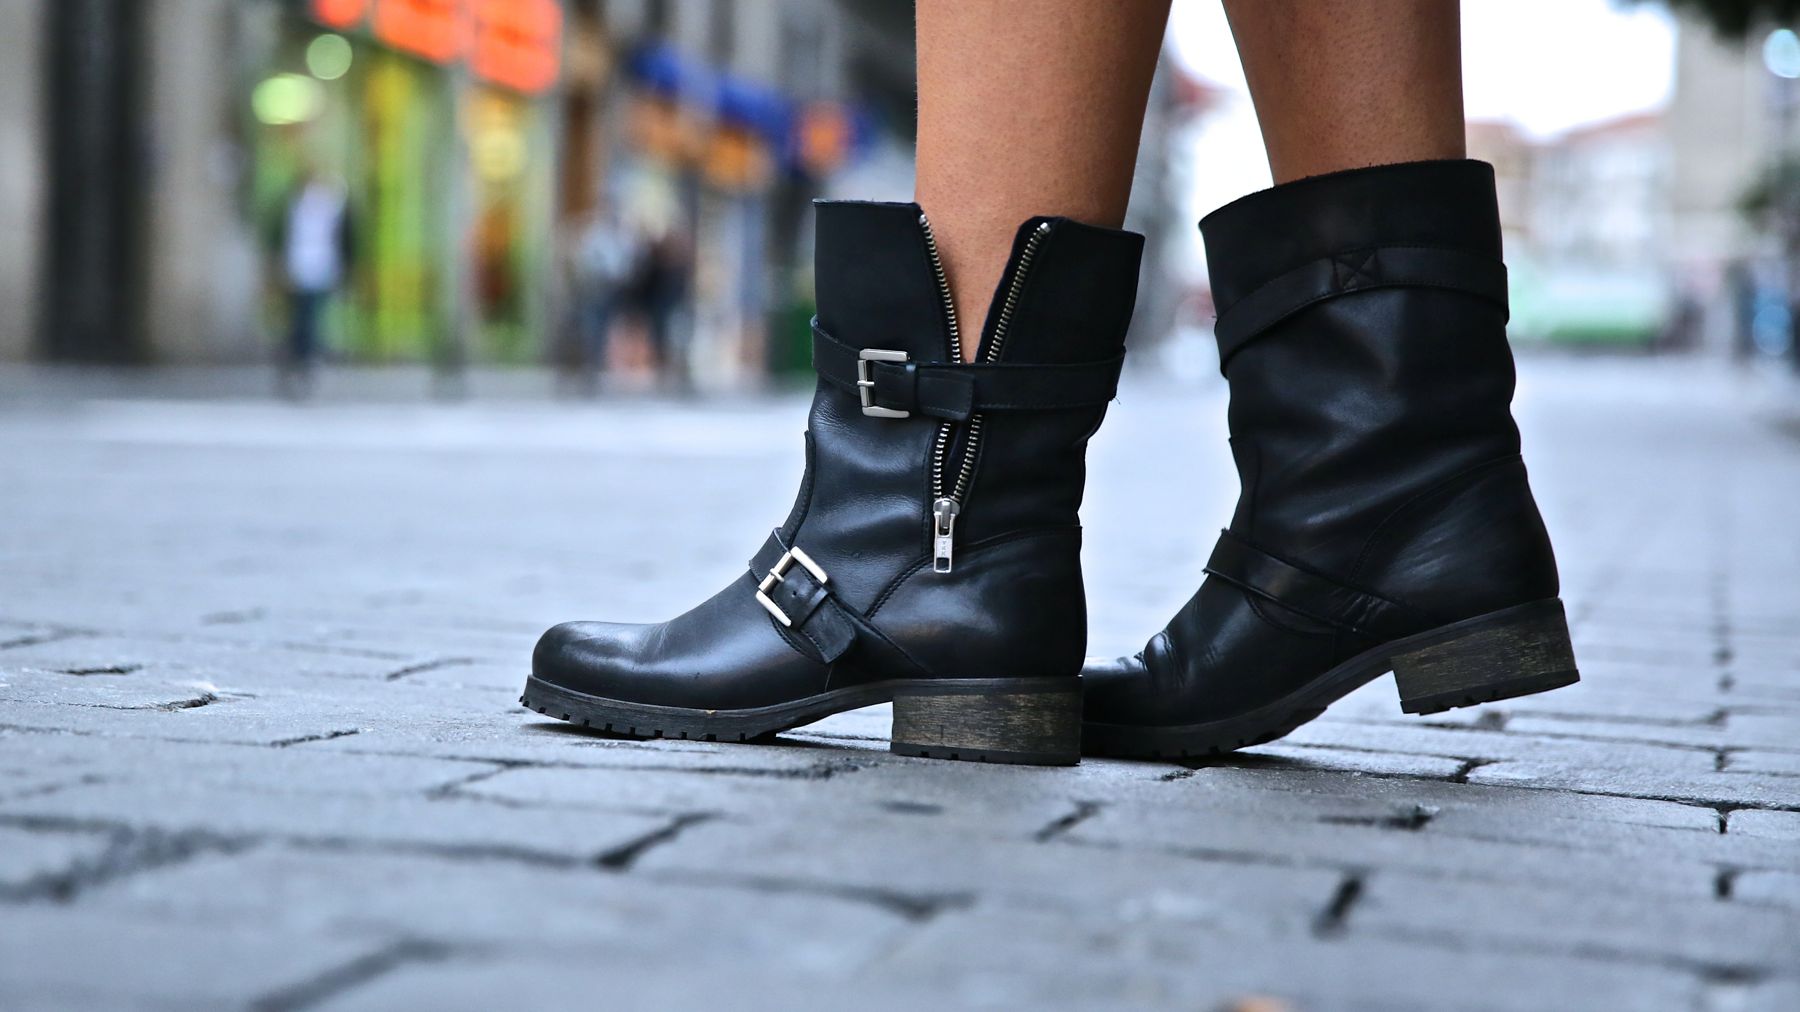 trendy_taste-look-outfit-street_style-ootd-blog-blogger-fashion_spain-moda_españa-falda_rosa-pink_skirt-abrigo_pelo-leather-piel-biker_boots-botas_moteras-rock-ghd-aecc-1